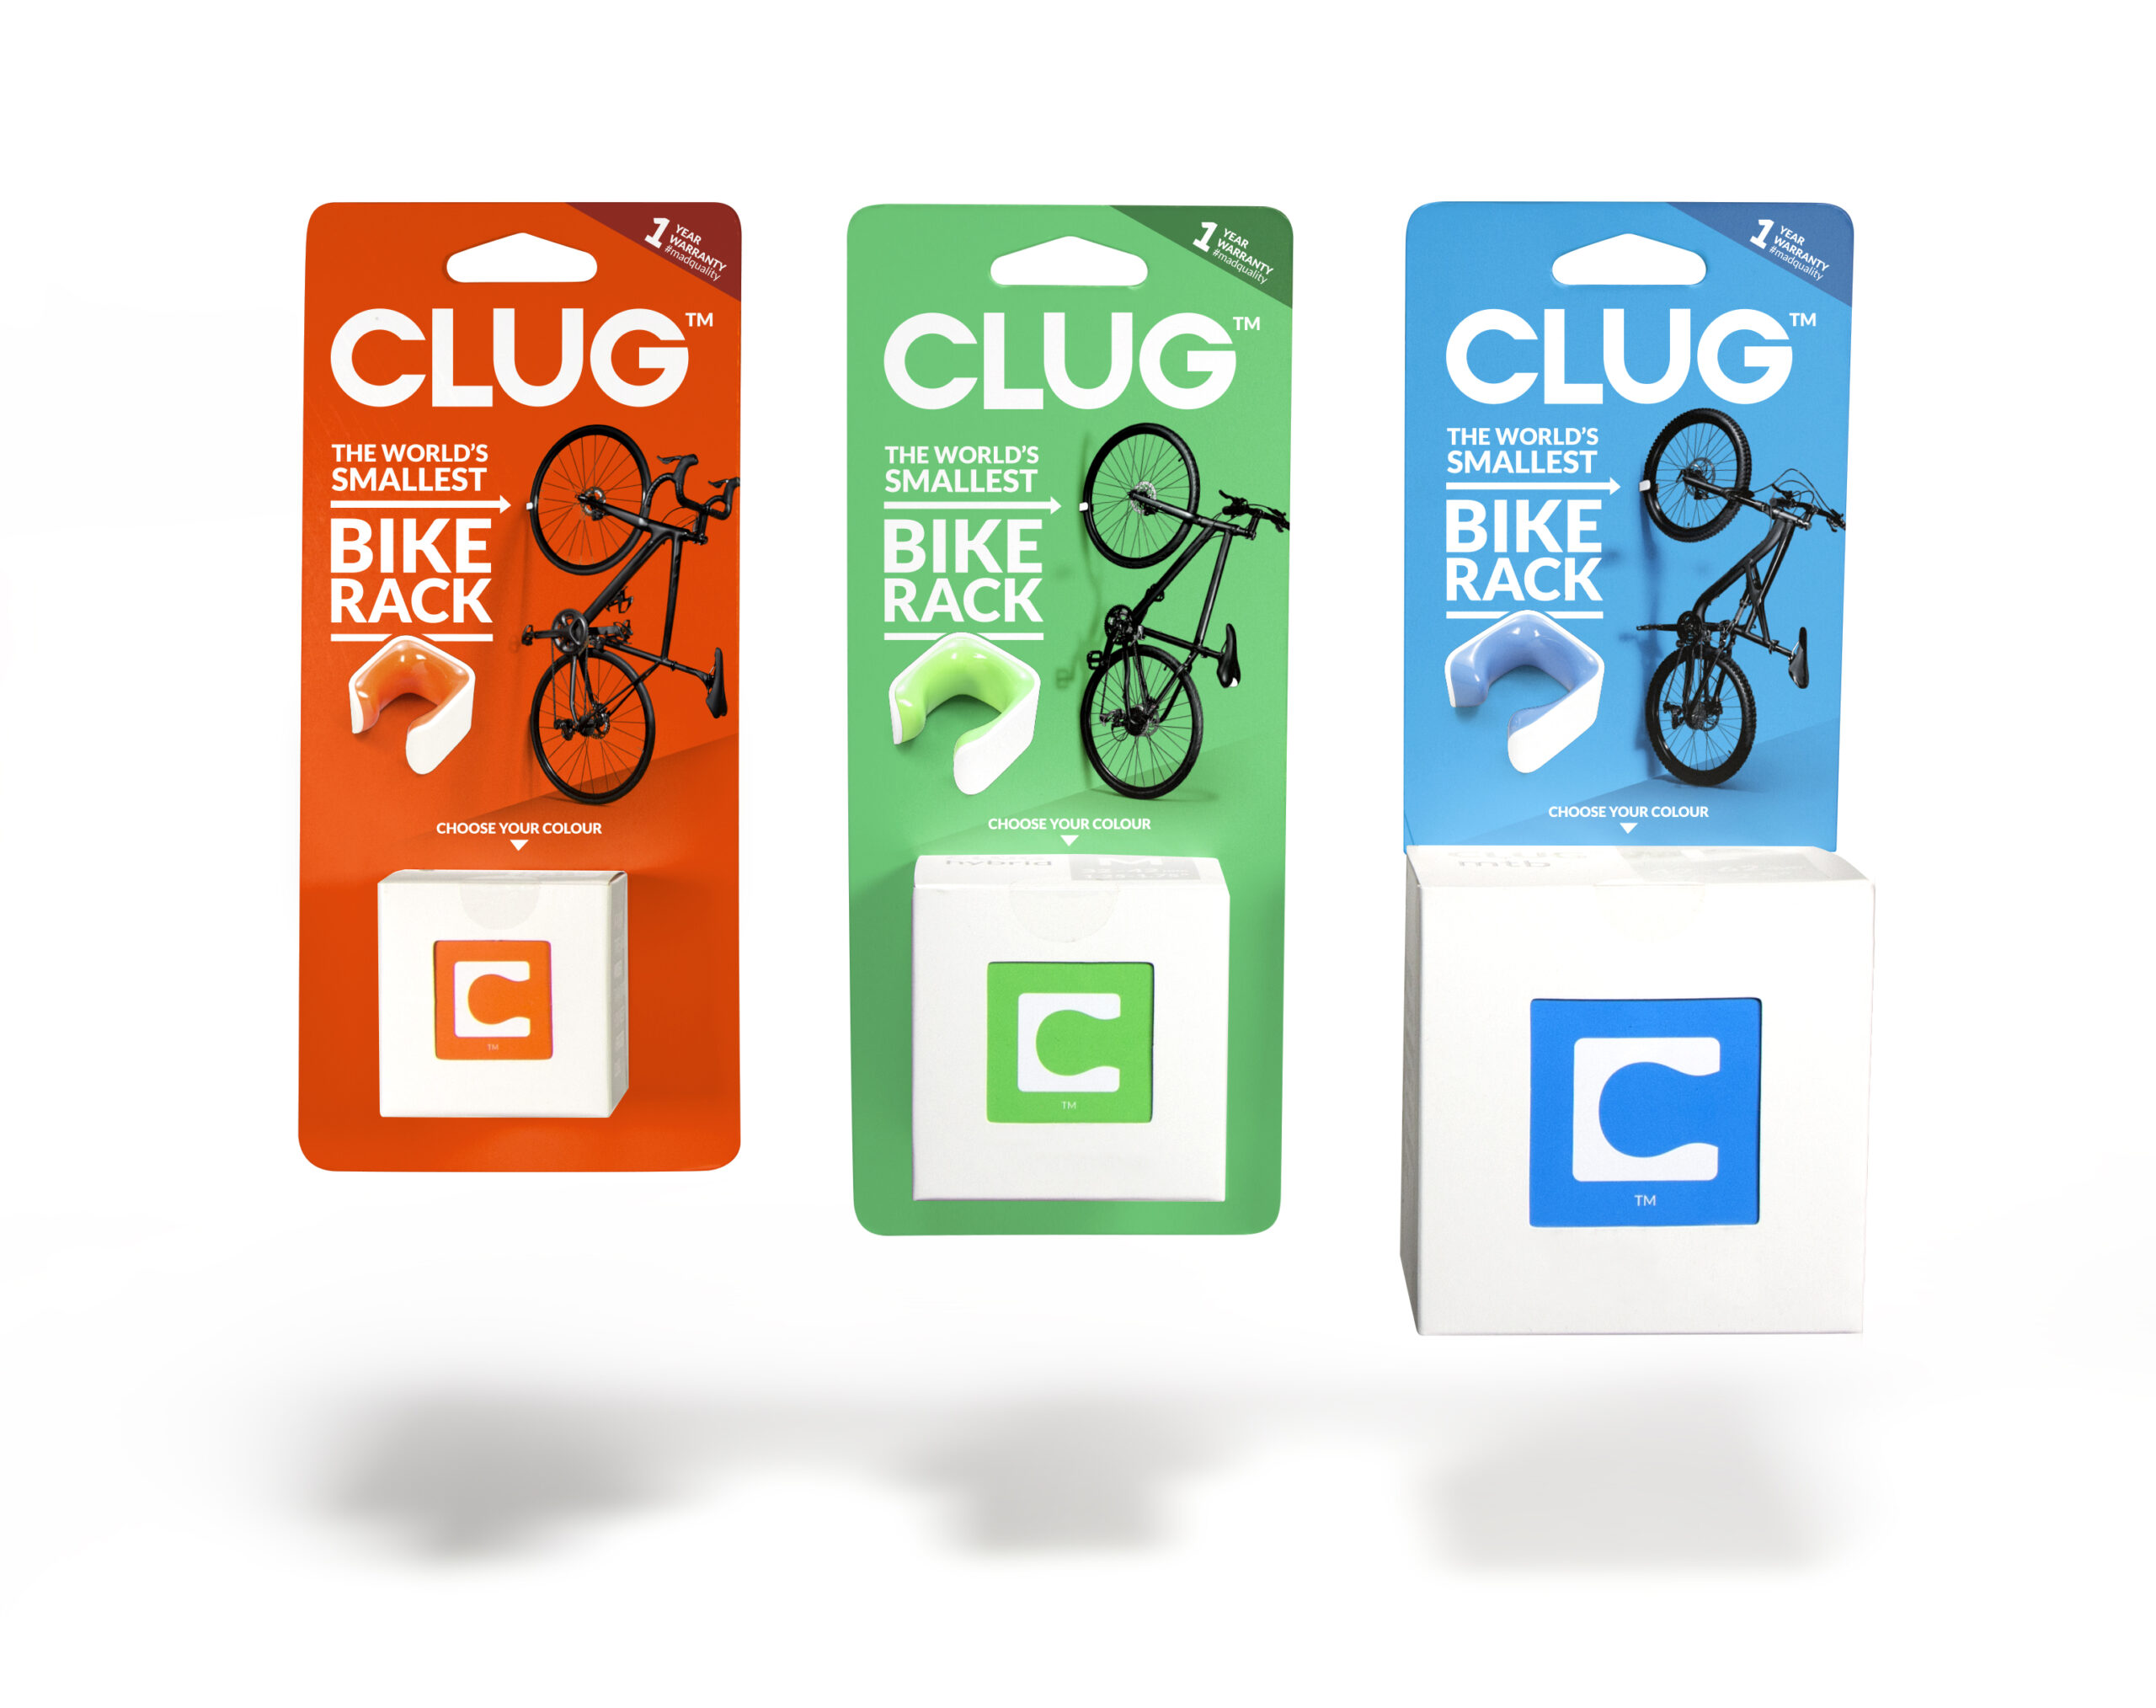 CLUG Bike Clip - Winner of  the DIELINE Awards Best Product Packaging 2015